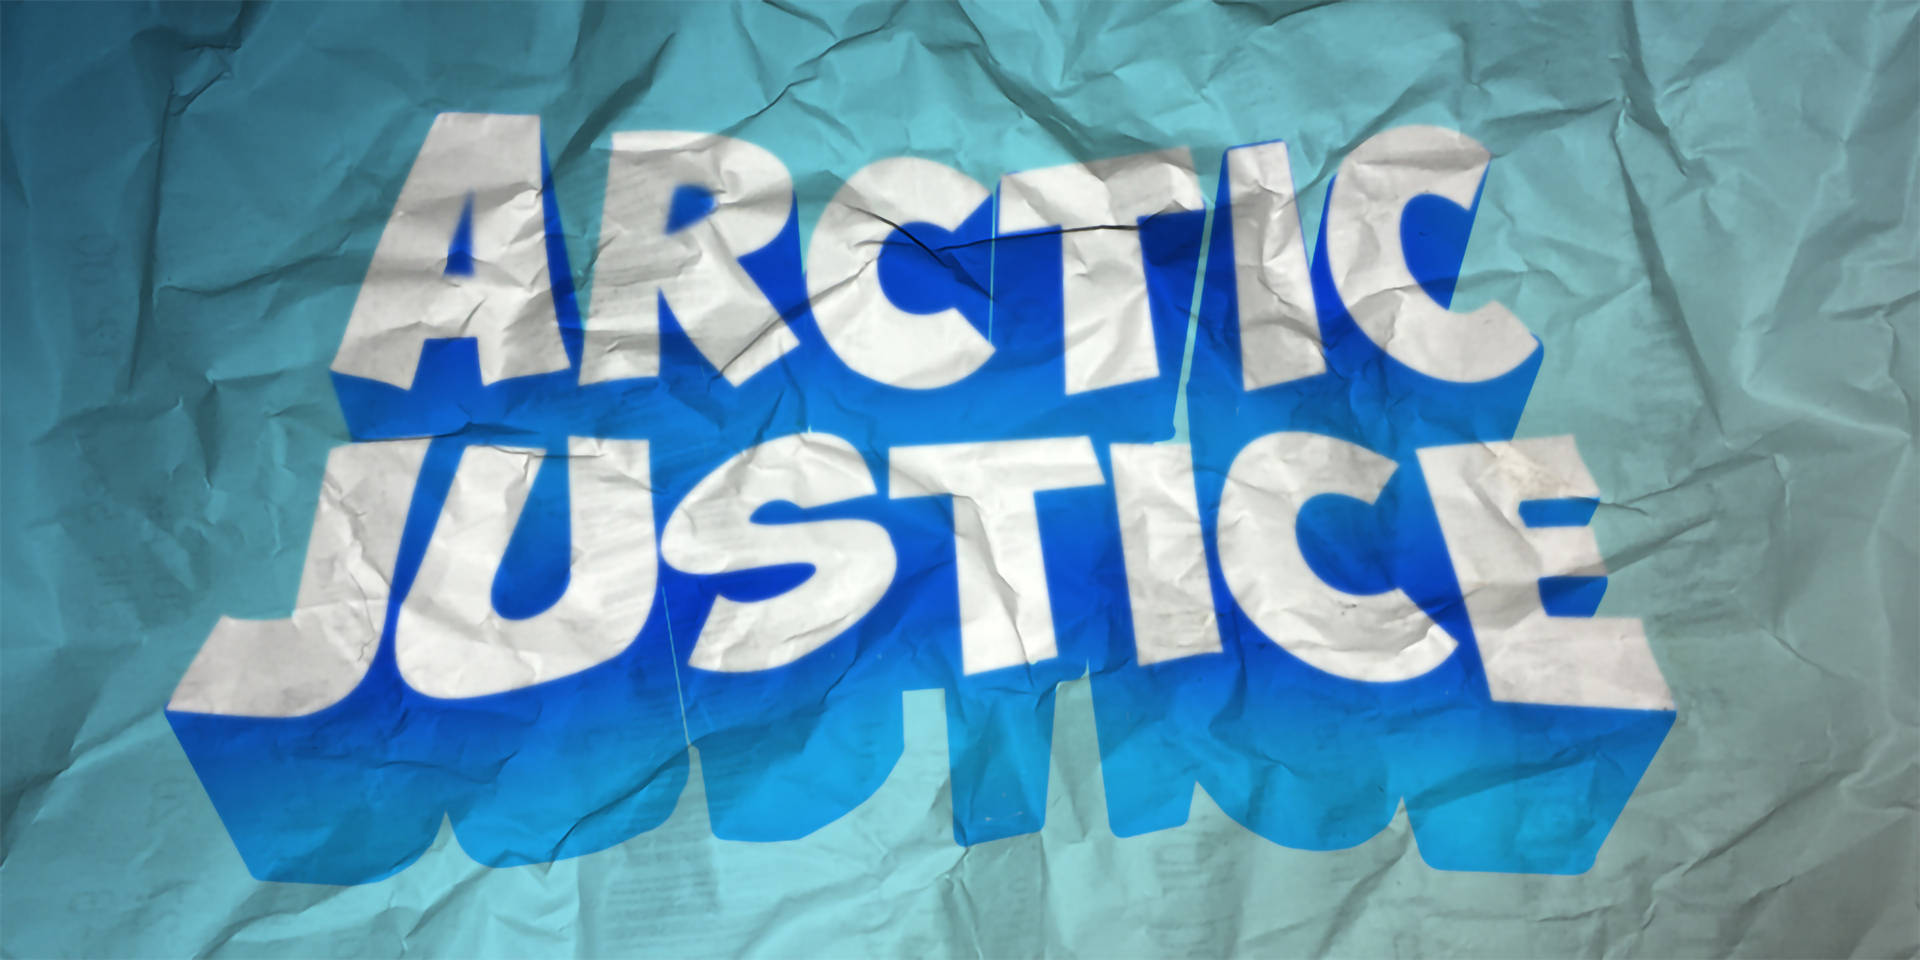 Arctic Justice Crumpled Logo Background